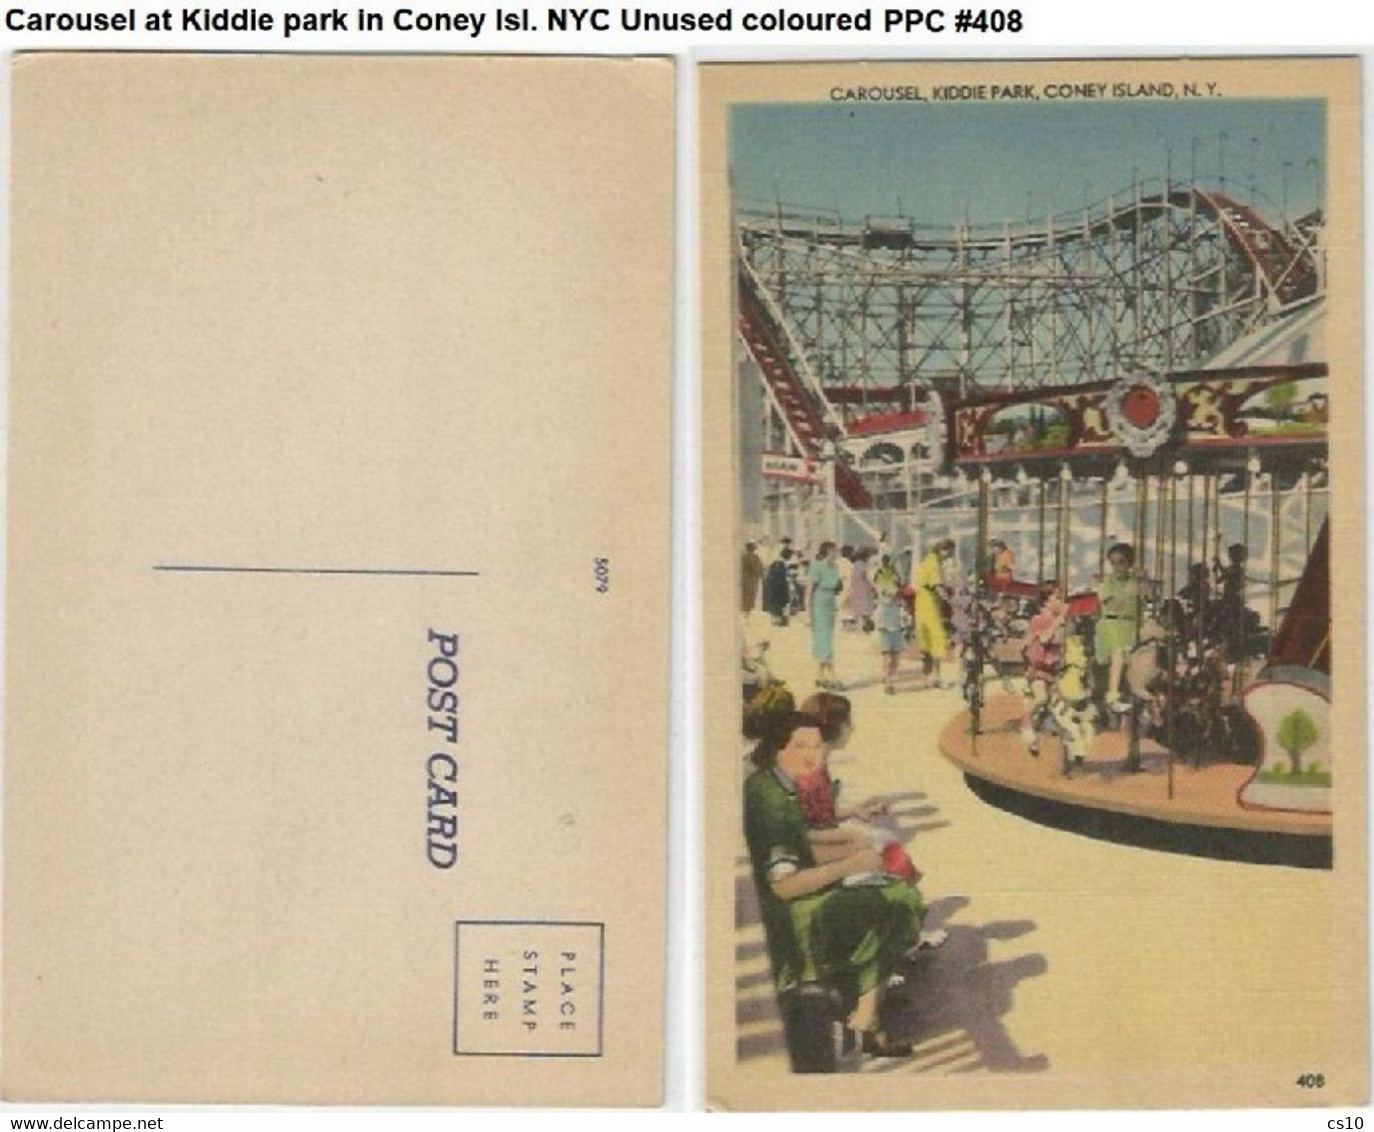 Carousel At Kiddie Park In Coney Isl. NYC Unused Coloured PPC #408 - Parchi & Giardini